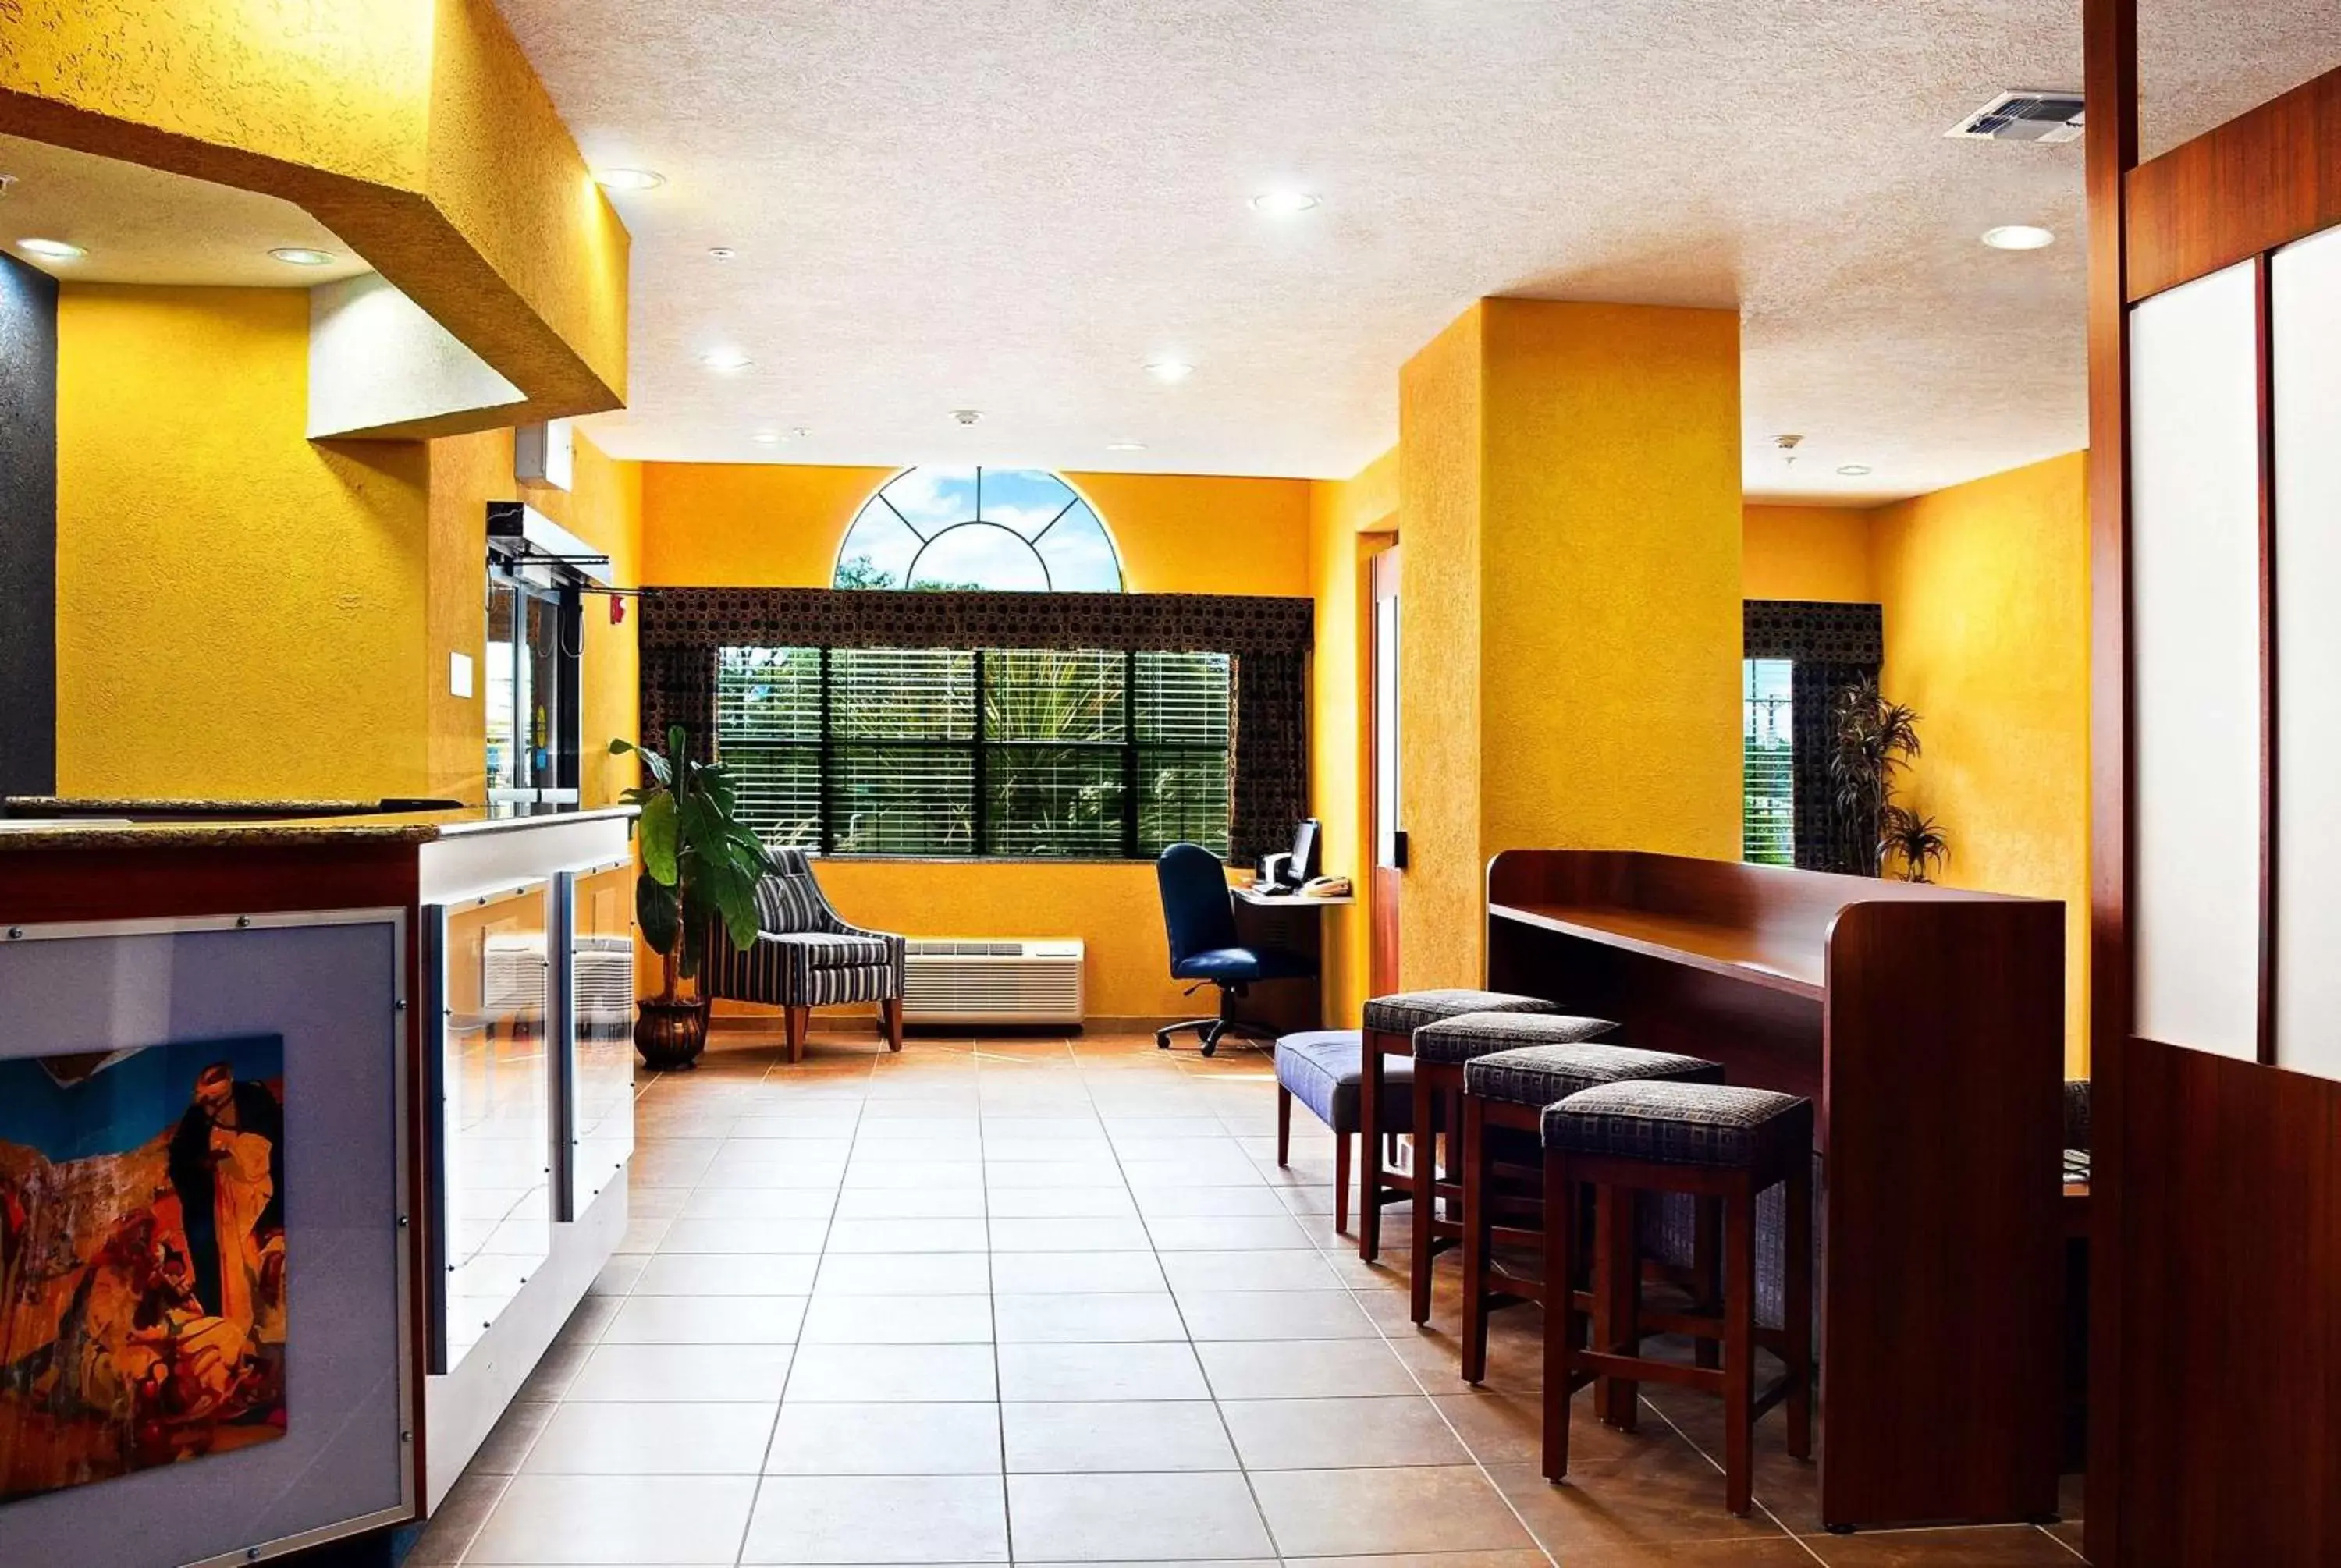 Lobby or reception in Microtel Inn & Suites by Wyndham New Braunfels I-35